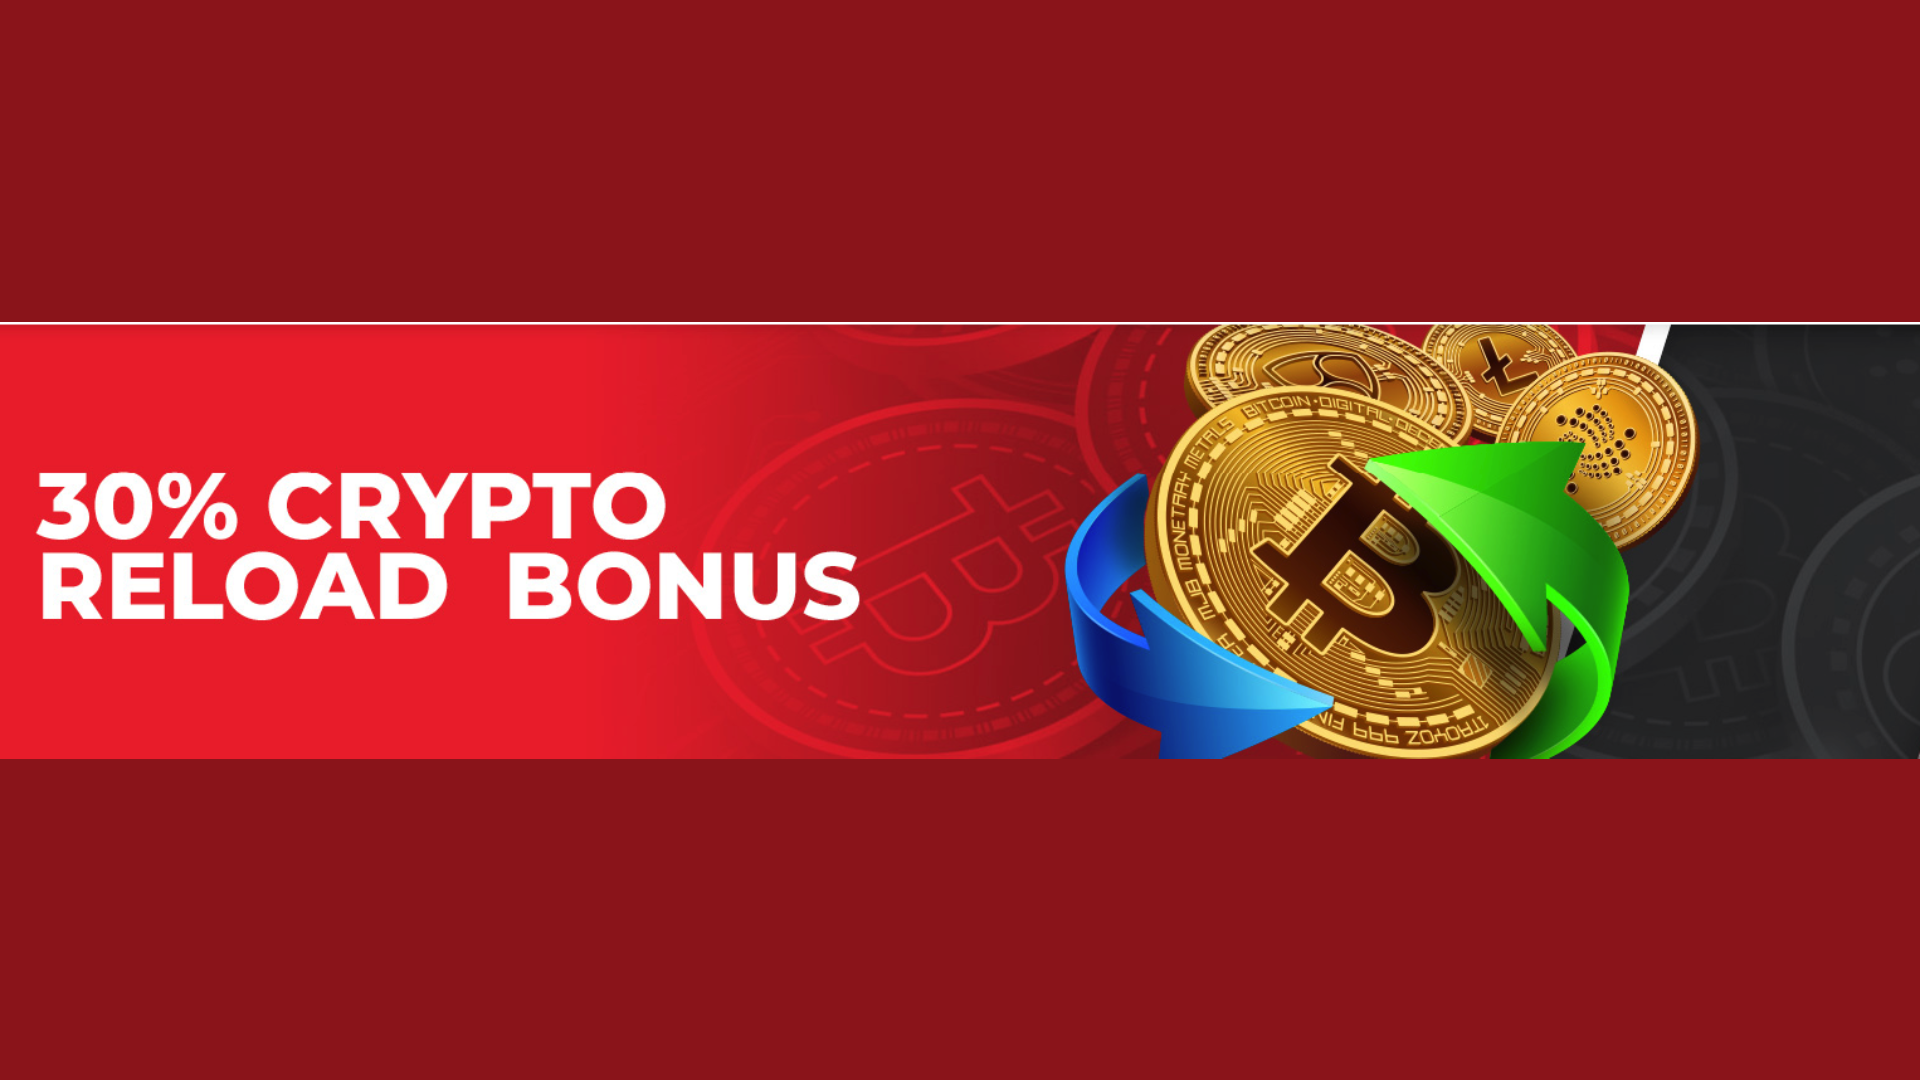 BetOnline 30% Crypto Reload Bonus up to 300 USD